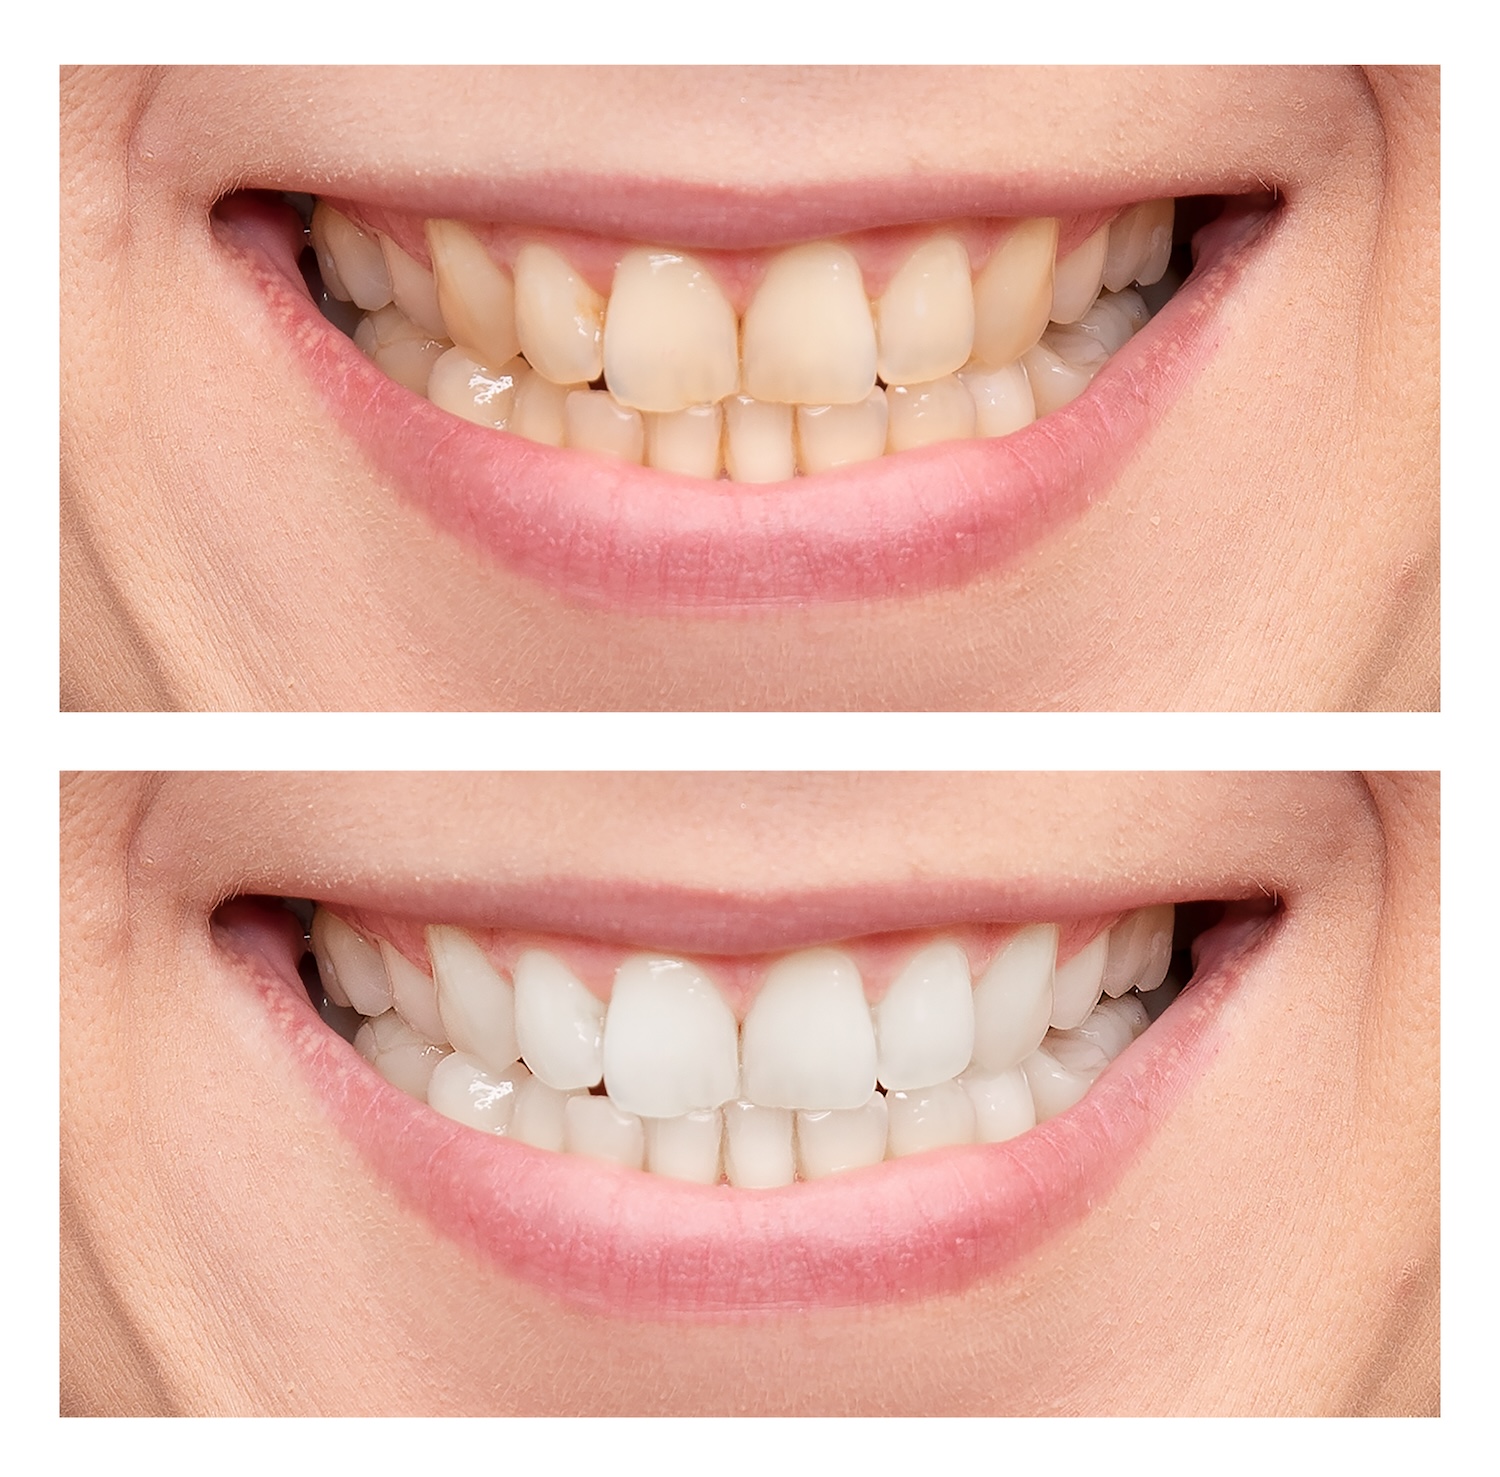 teeth whitening strips, teeth whitening, professional teeth whitening, whitening strips effectiveness, CarolinasDentist, dental health, bright smile, tooth sensitivity